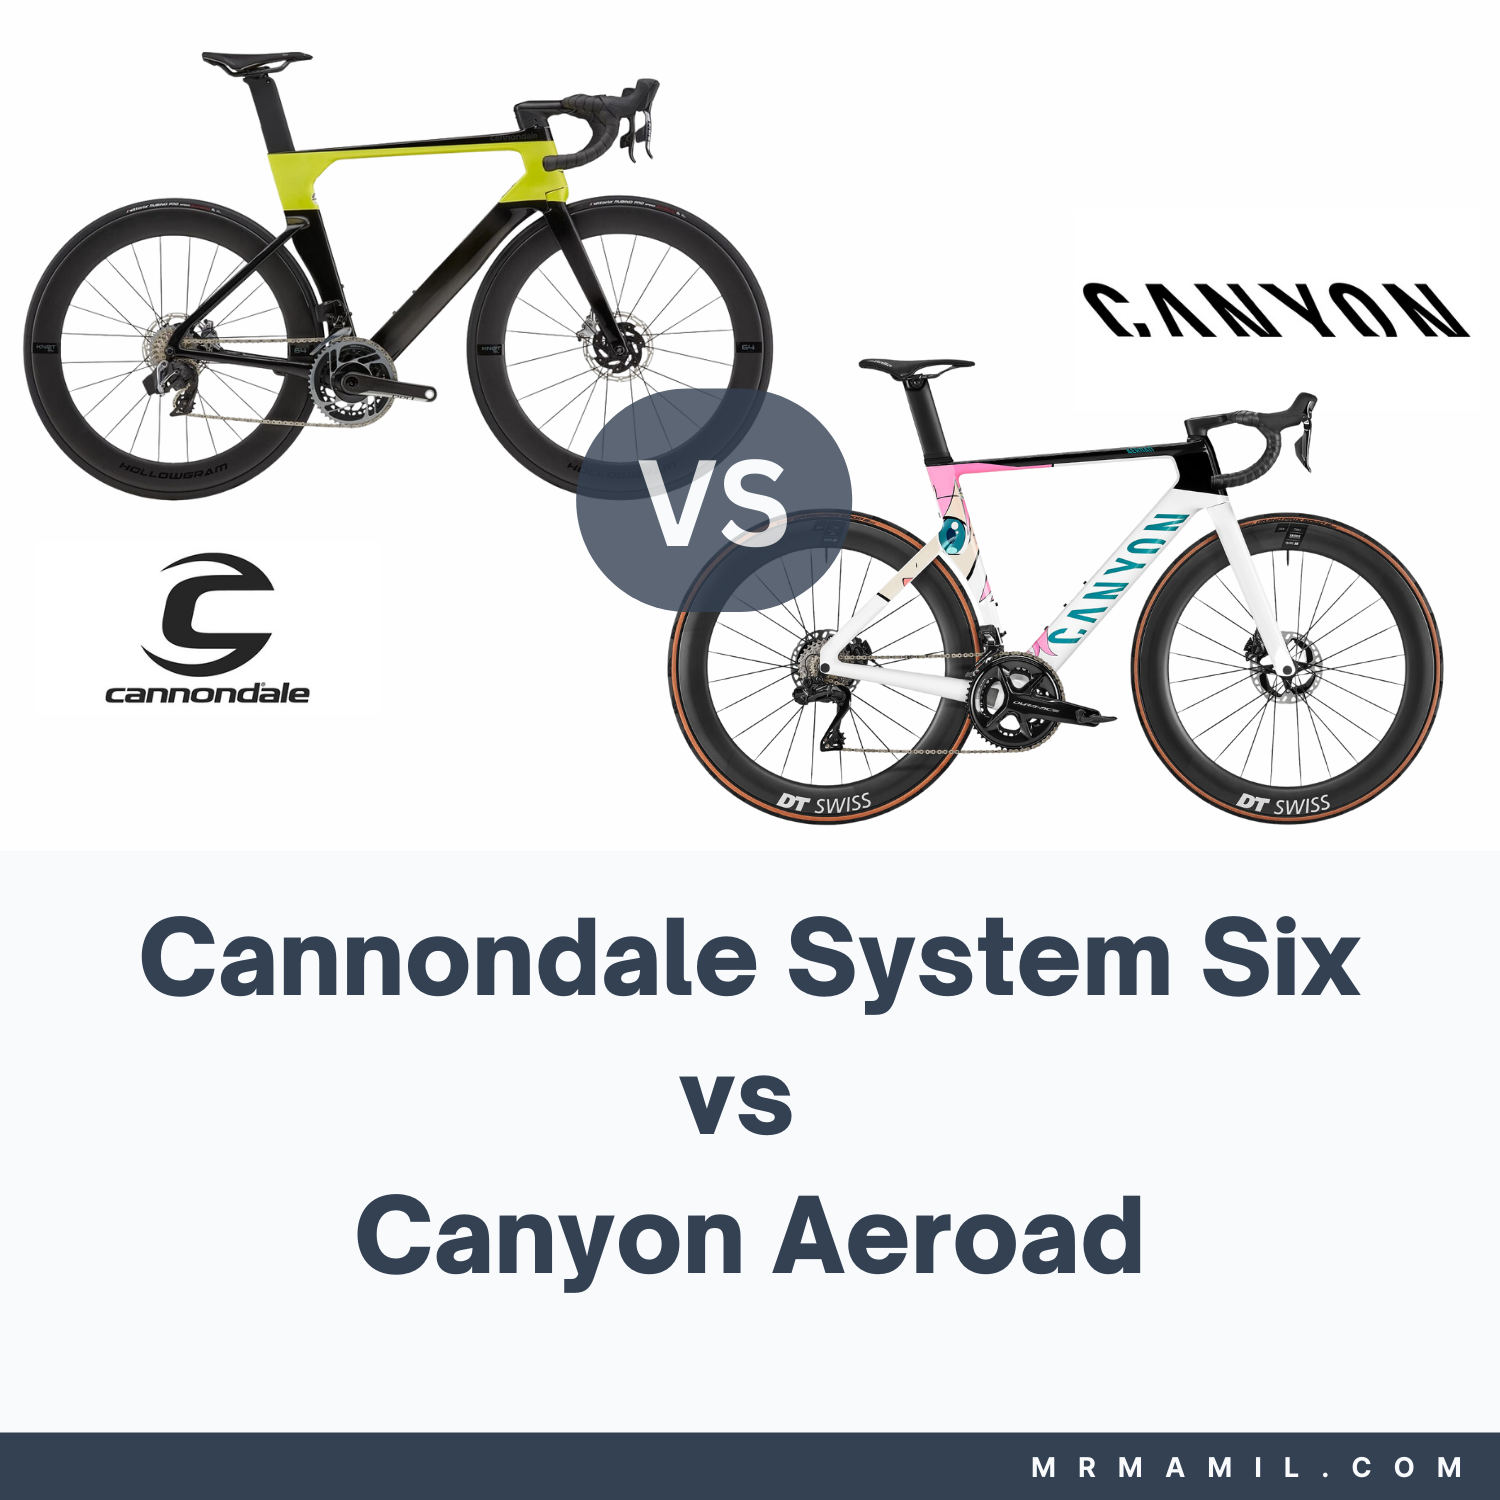 Cannondale System Six vs Canyon Aeroad